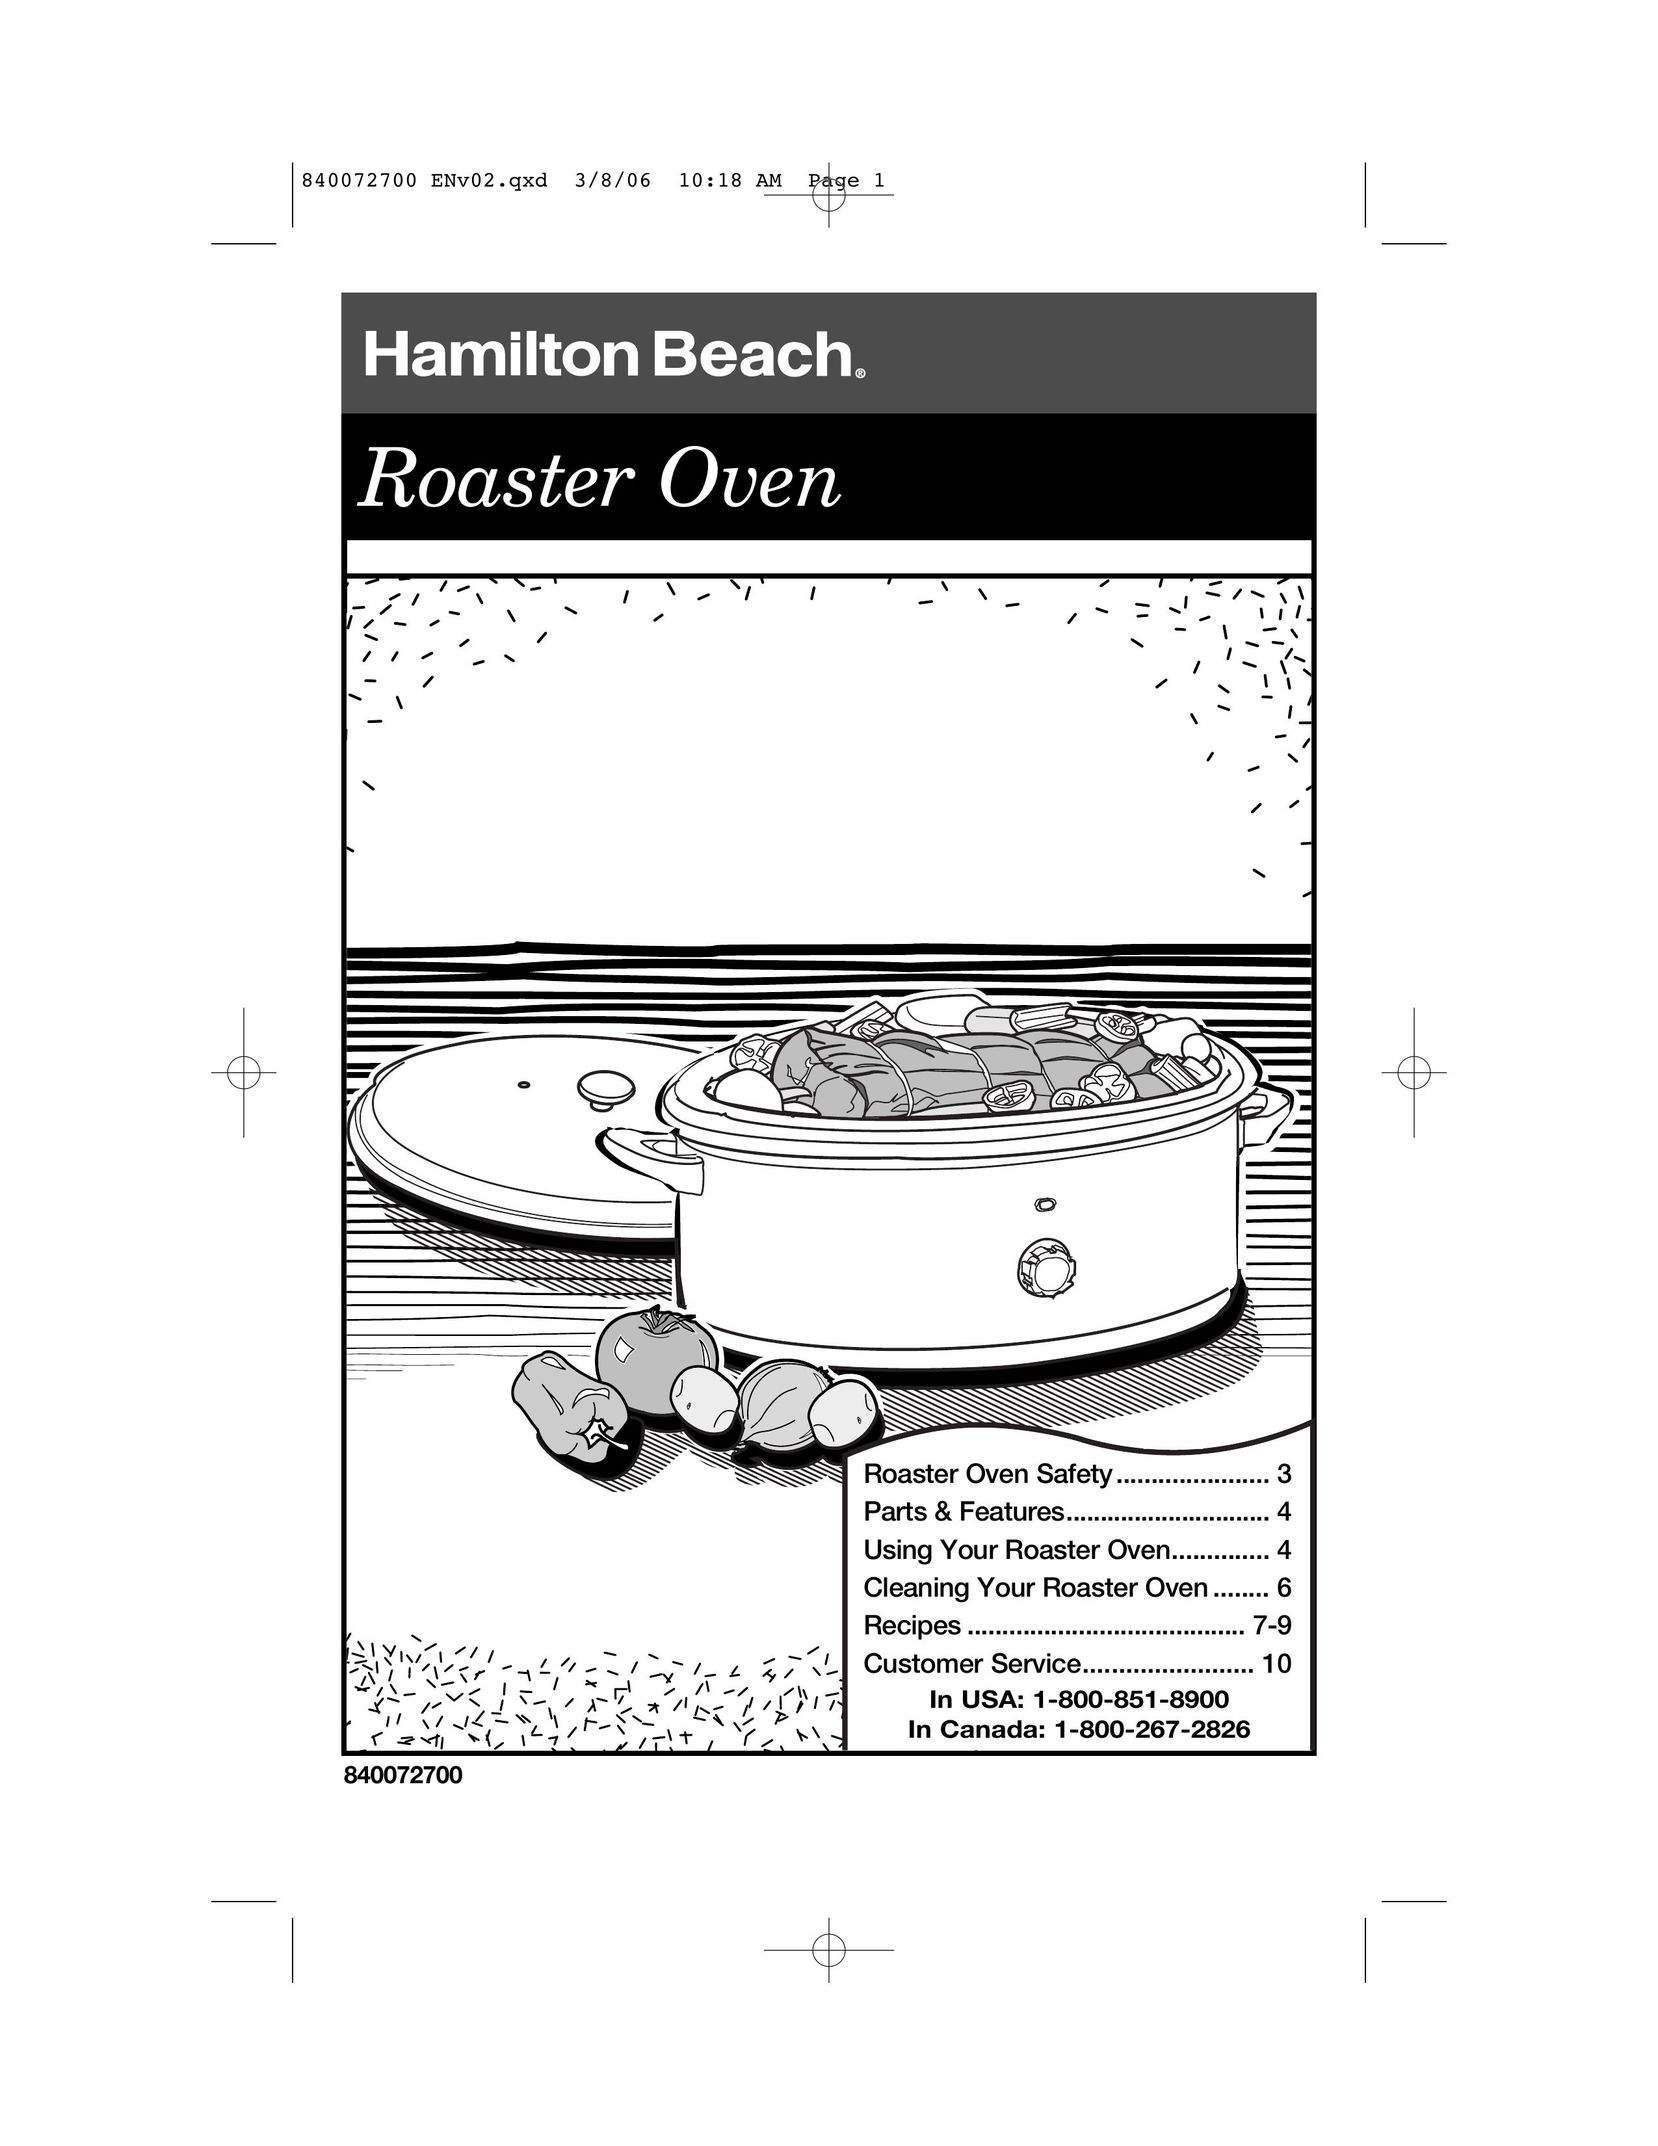 Hamilton Beach 32600s Oven User Manual